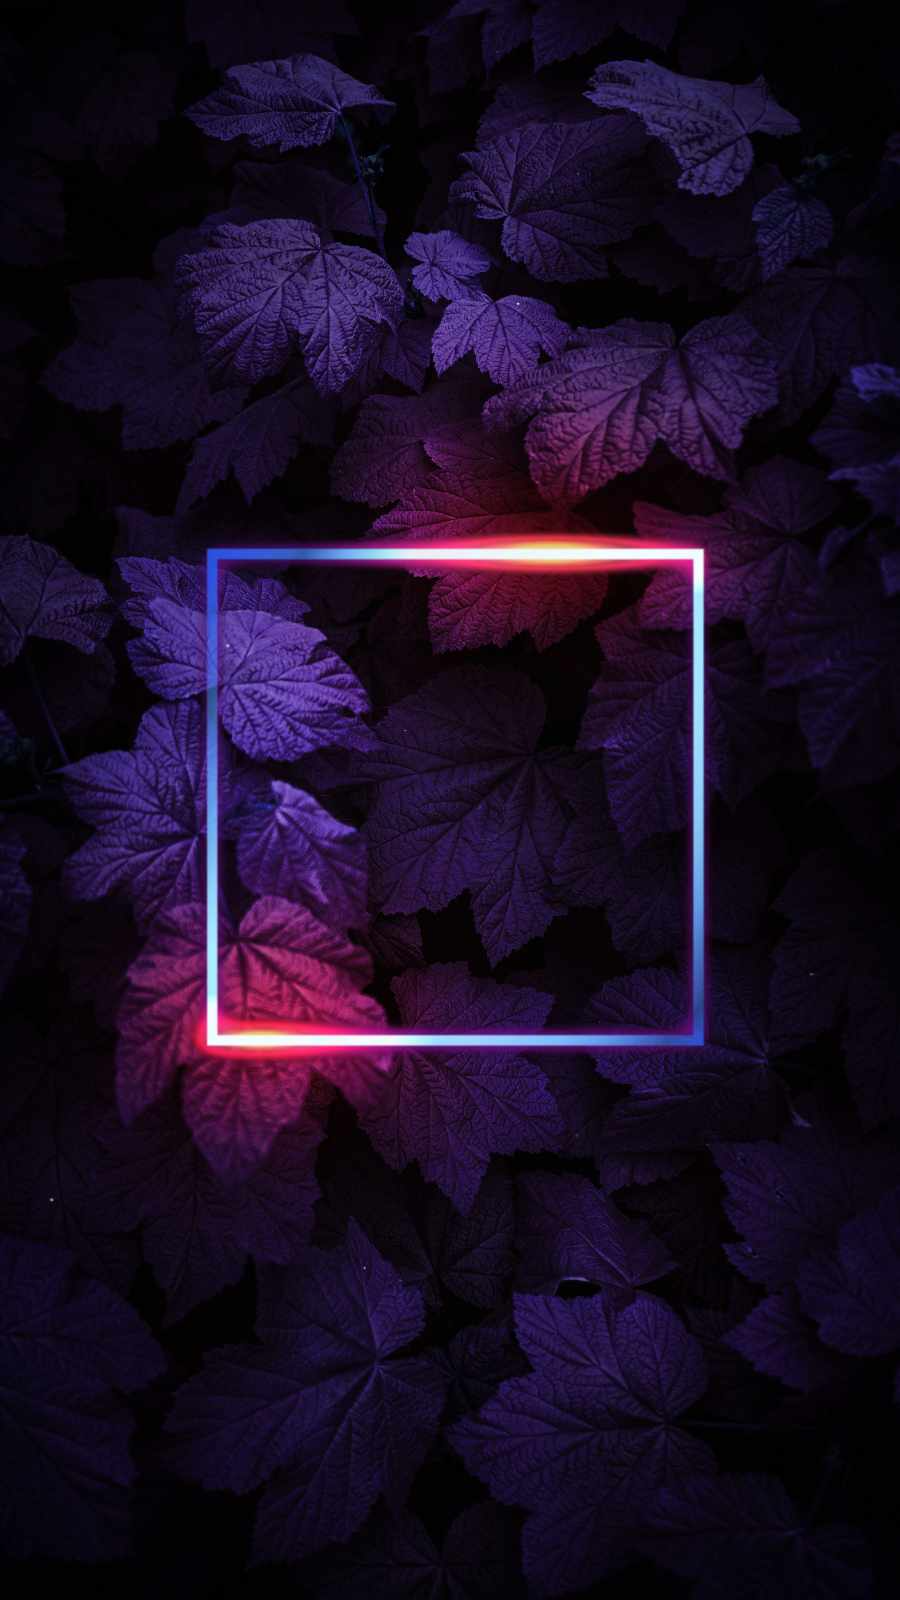 20 Cool Neon iPhone wallpapers Free HD download in 2023  iGeeksBlog